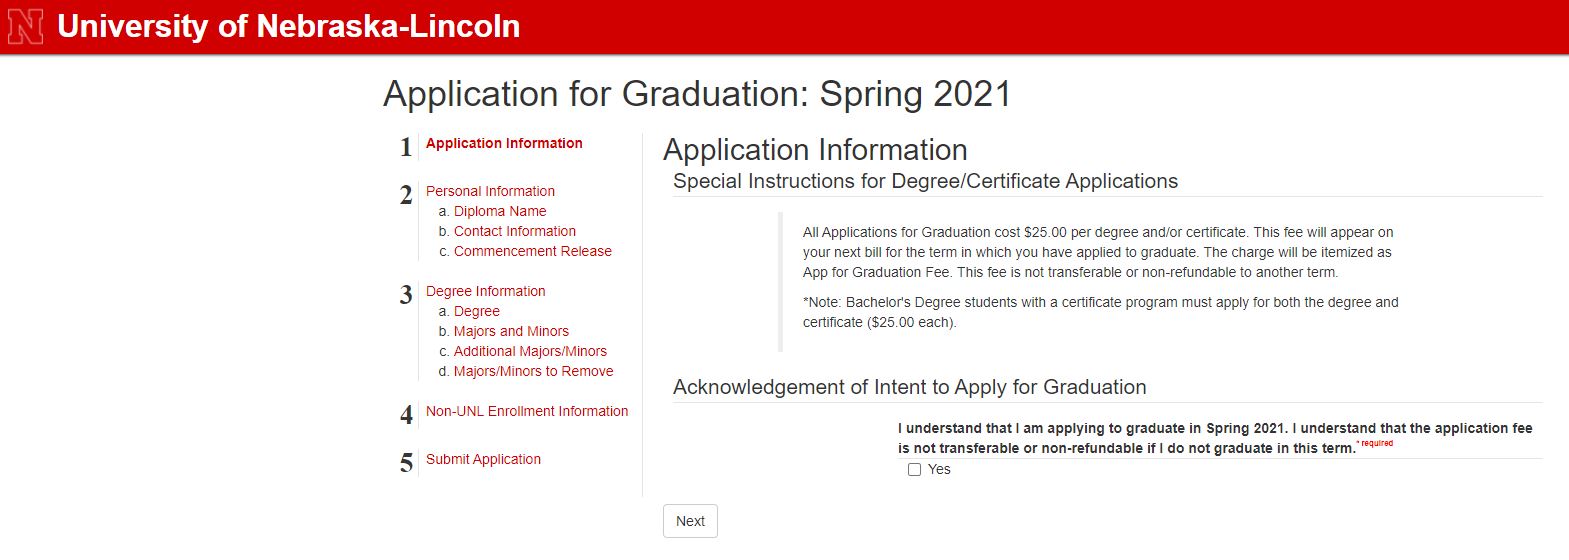 Application for Graduation navigation